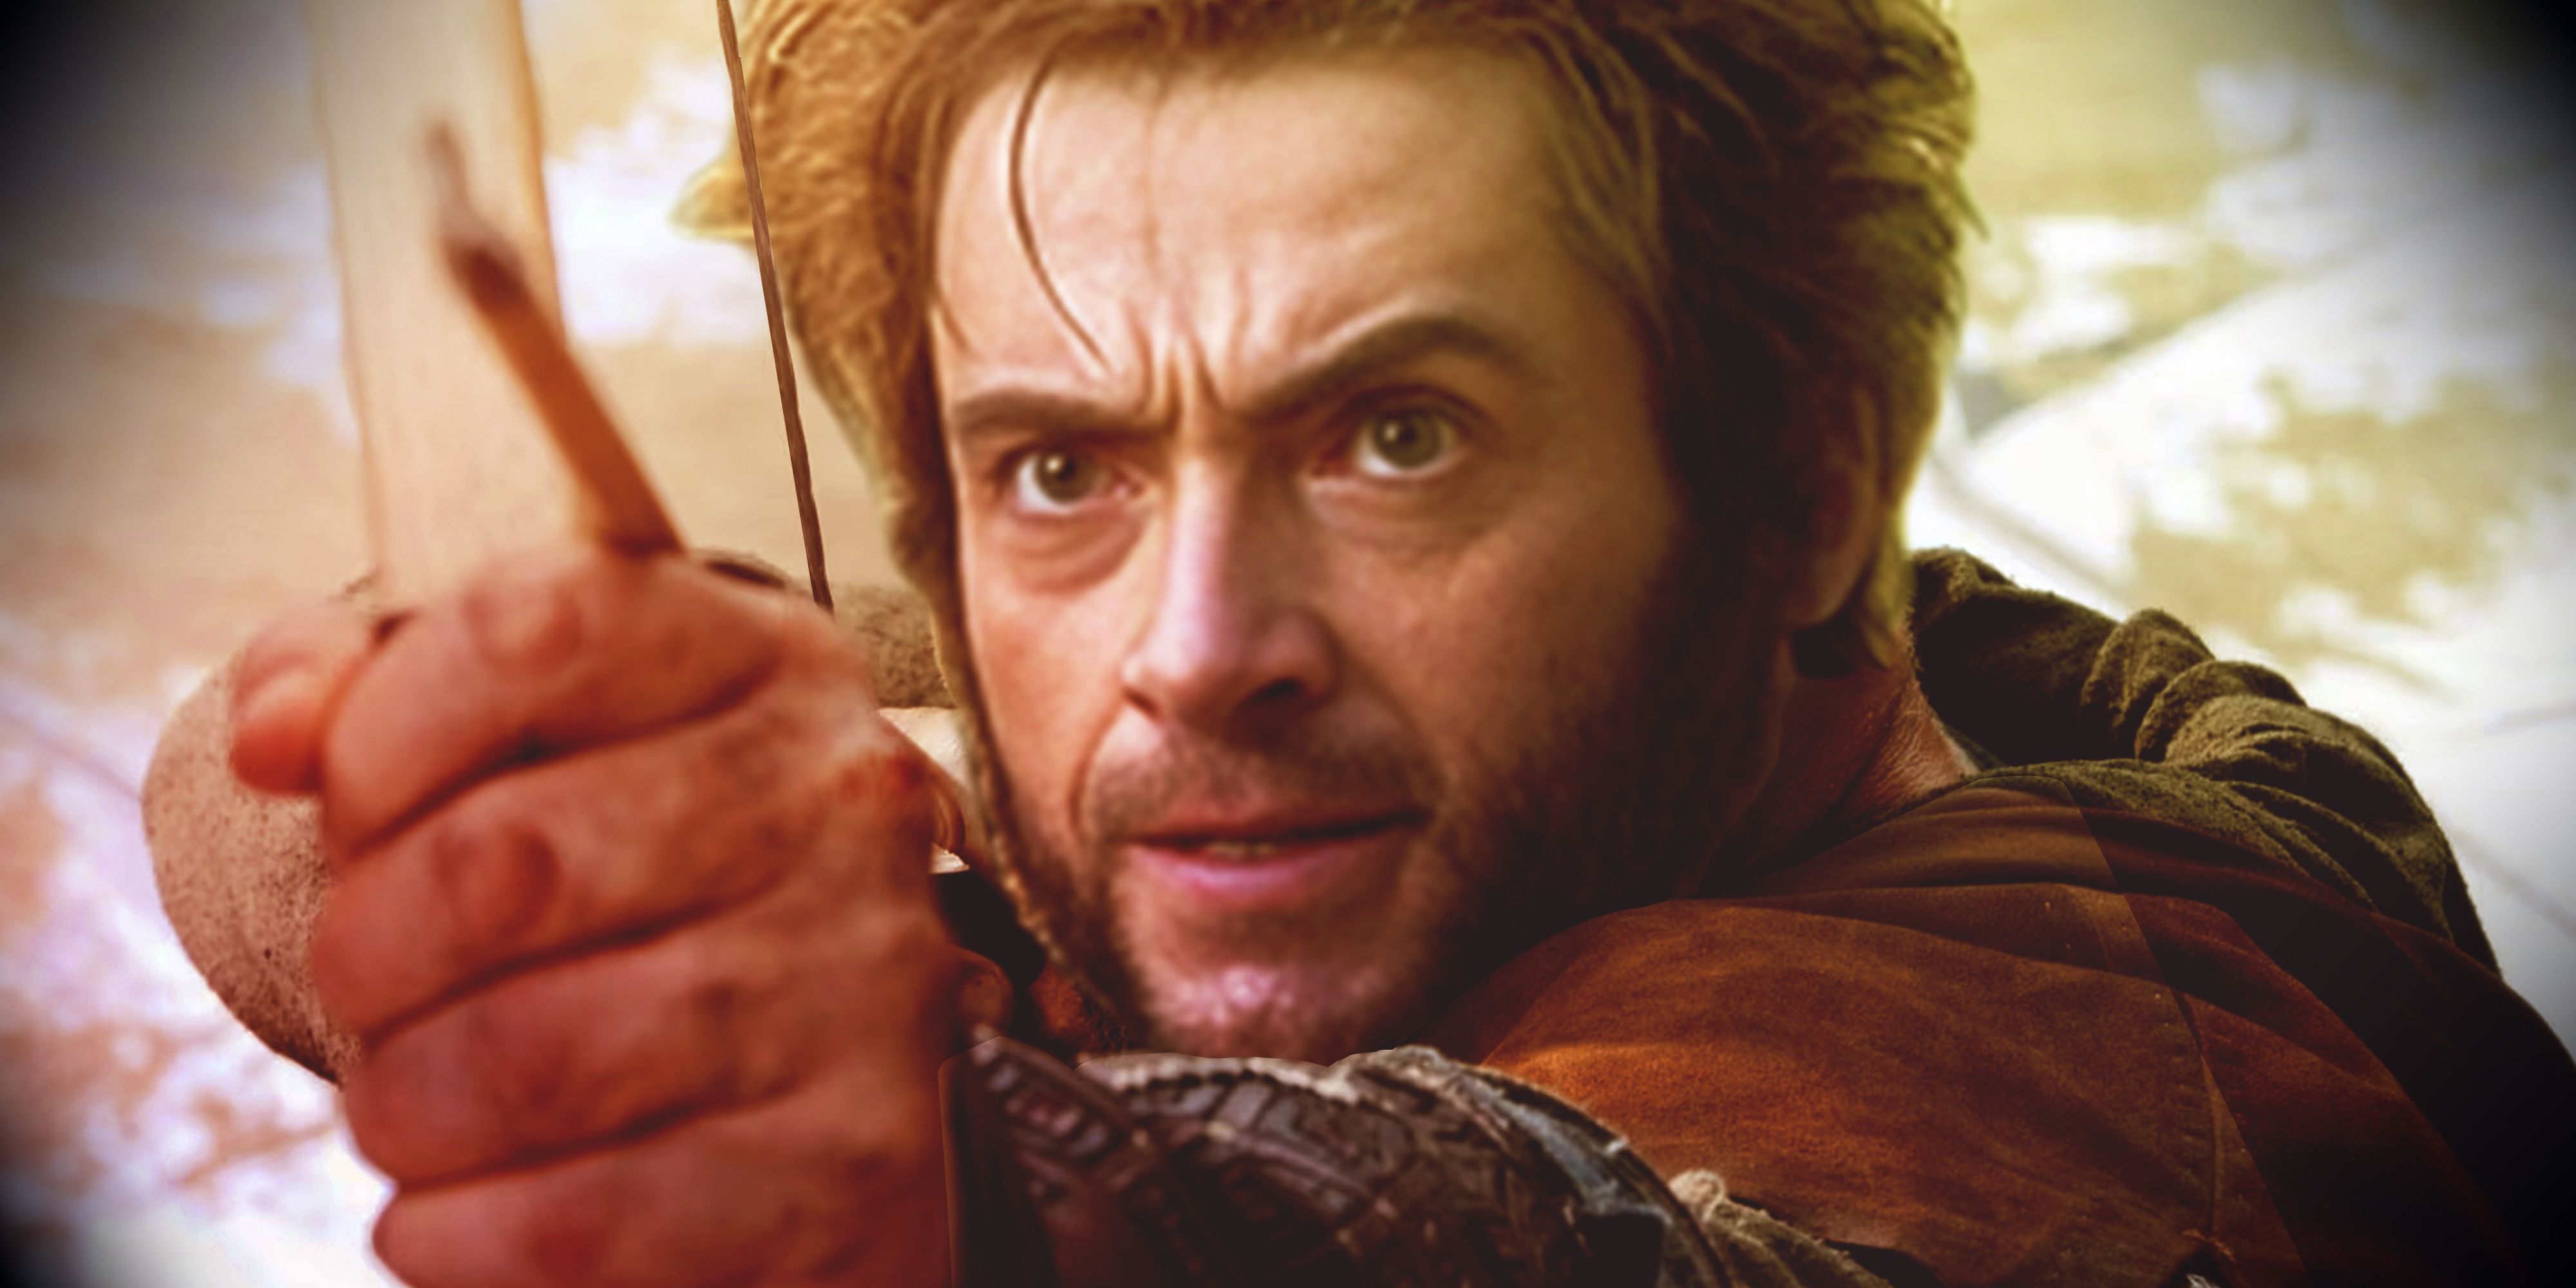 Hugh Jackman as Wolverine's head superimposed on Robin Hood's body, aiming a bow and arrow